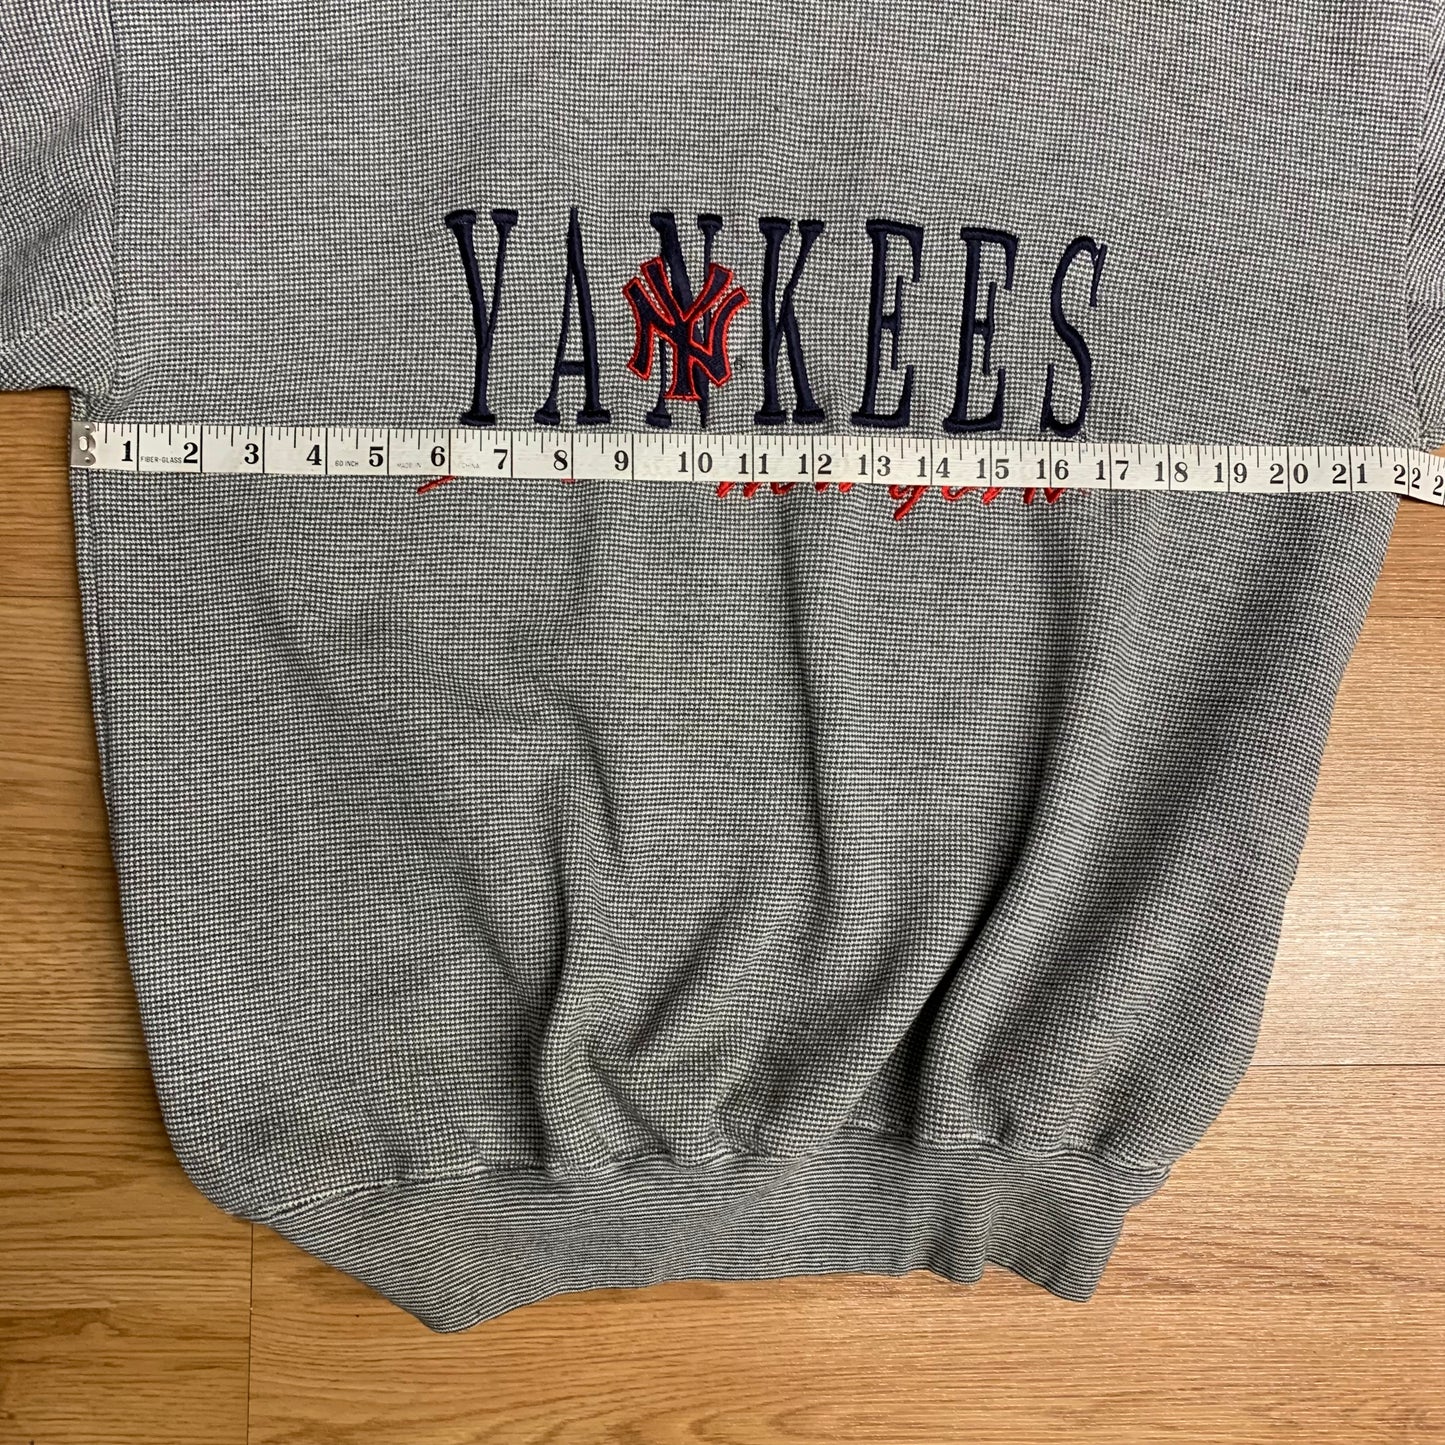 Logo Athletic Yankees Sweatshirt M